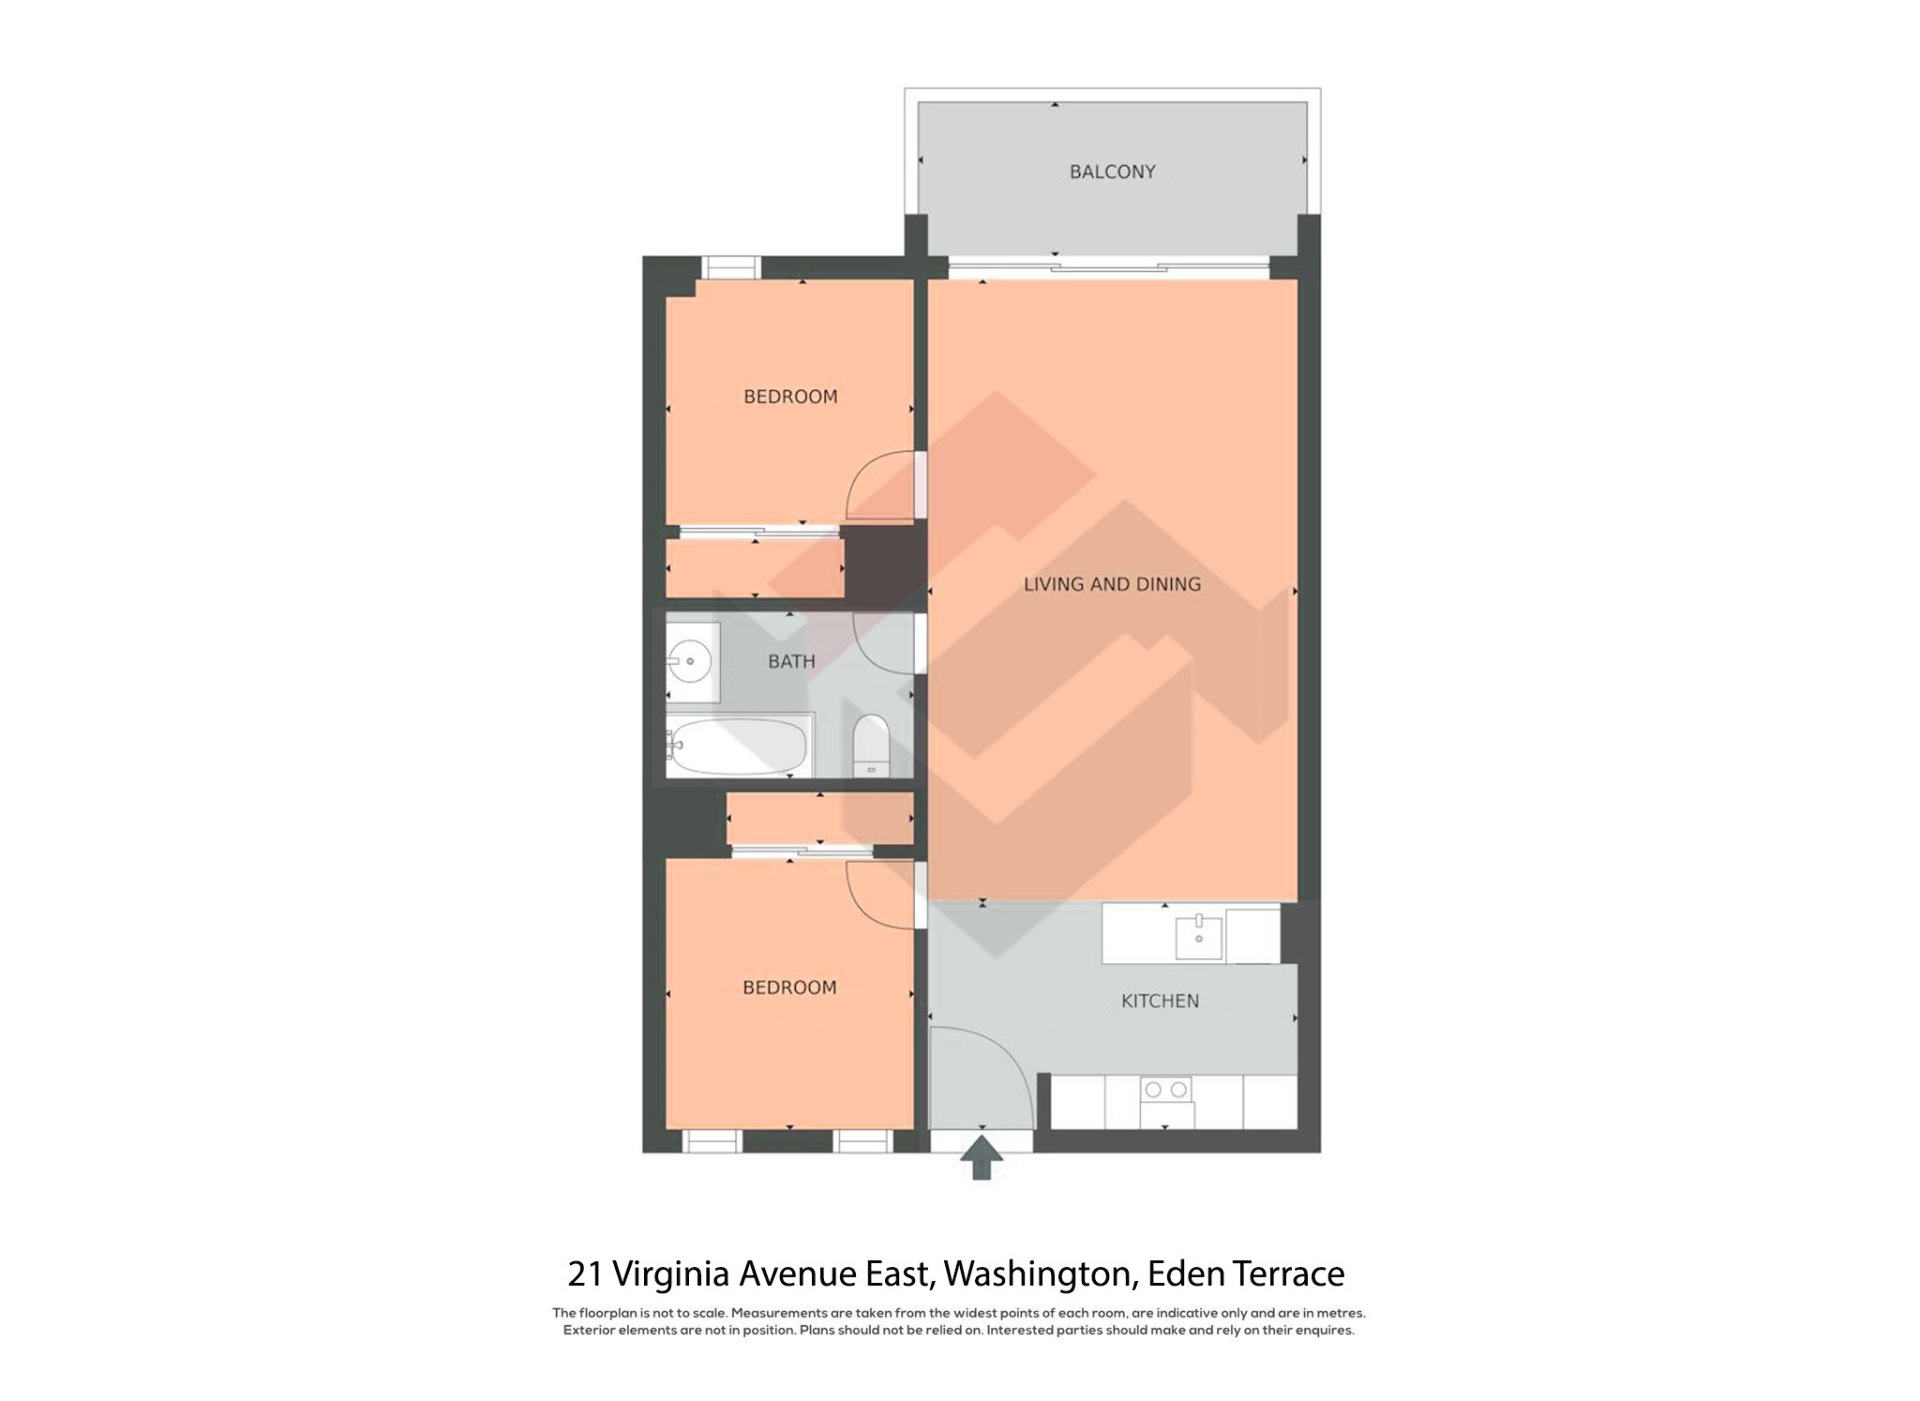 Floorplan | 21 Virginia Avenue East, Eden Terrace | Apartment Specialists